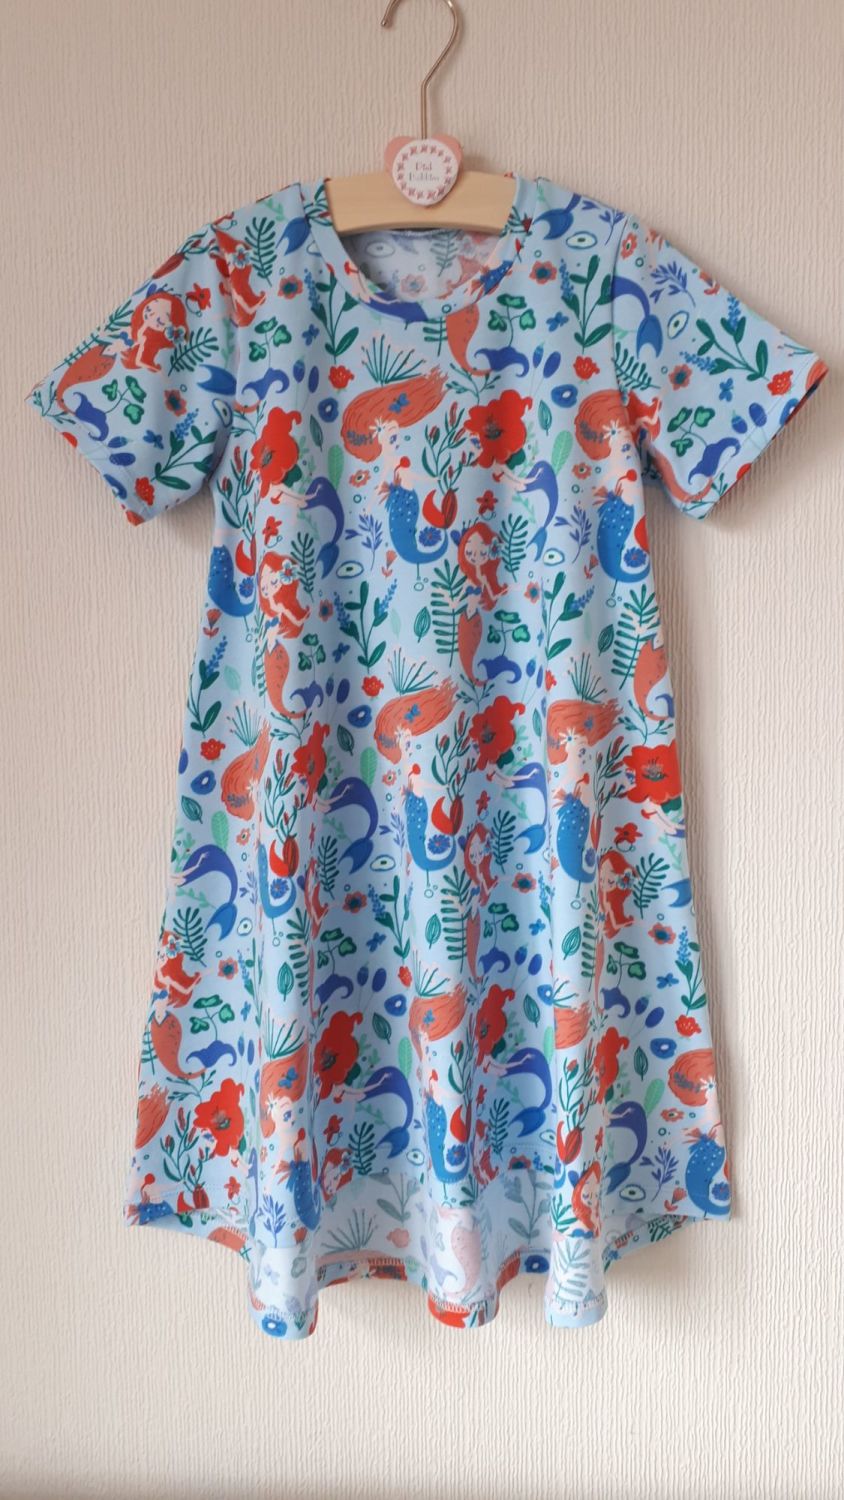 Mermaid t-shirt dress - made to order 